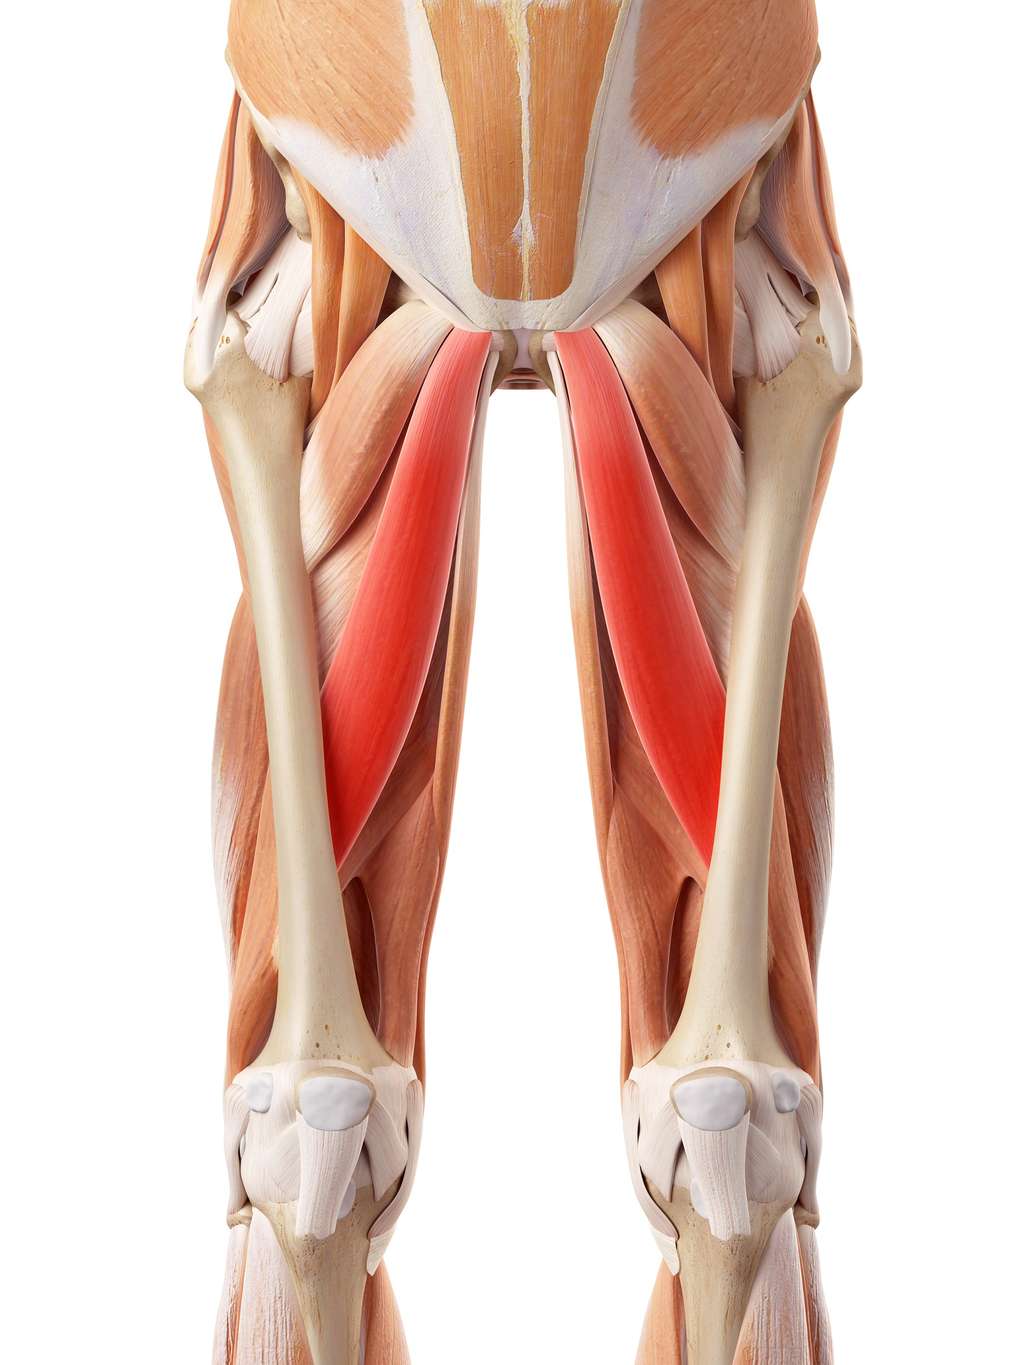 Localisation des muscles longs adducteurs (en rouge).© Sebastian Kaulitzki, Shutterstock